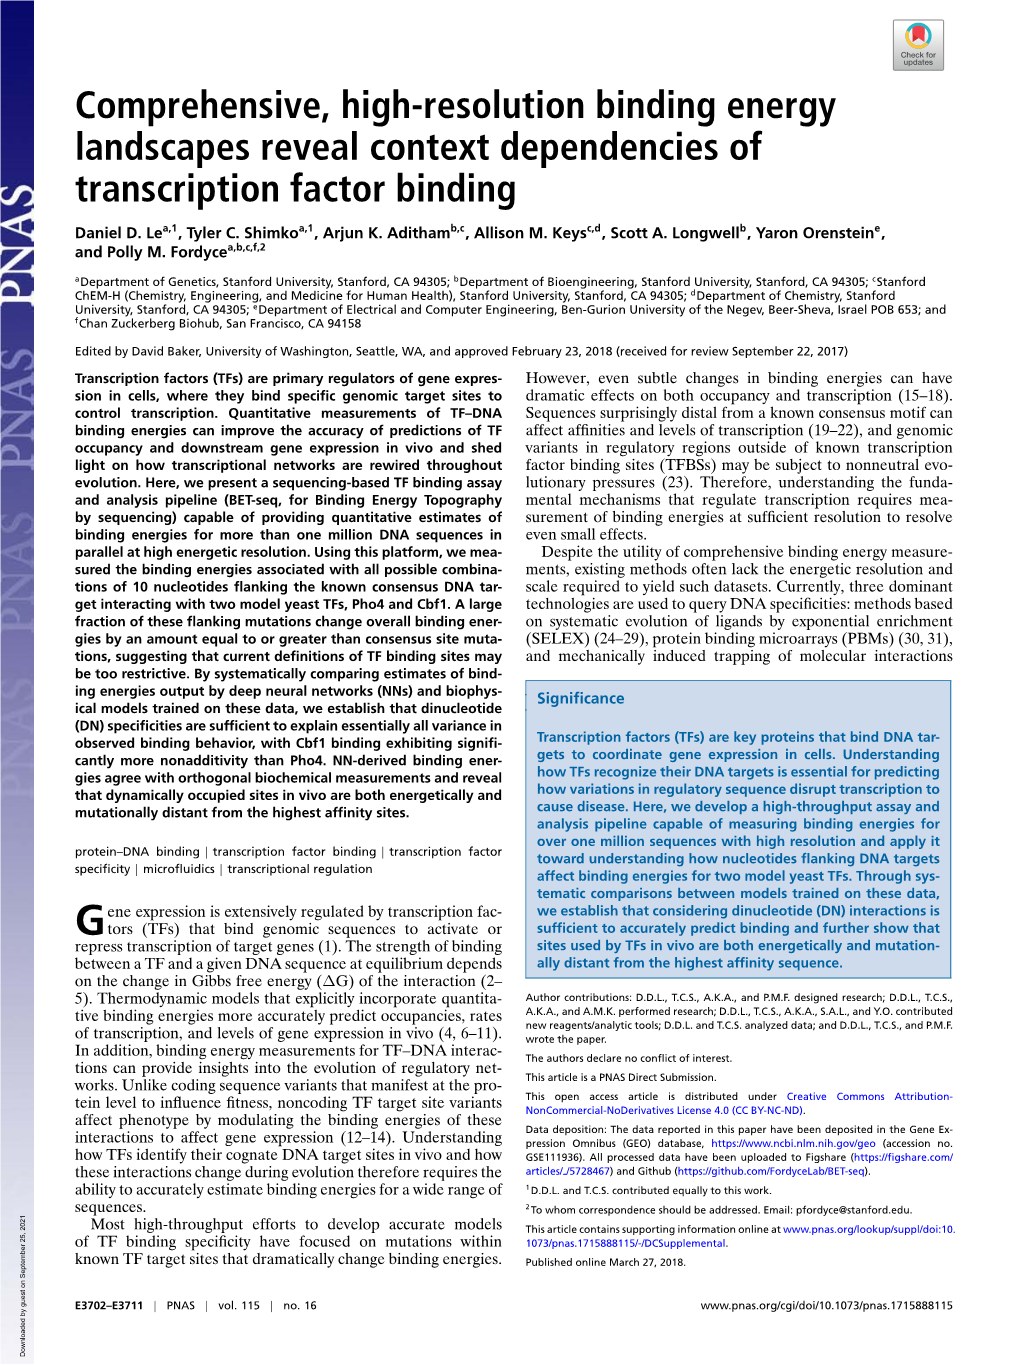 Comprehensive, High-Resolution Binding Energy Landscapes Reveal Context Dependencies of Transcription Factor Binding